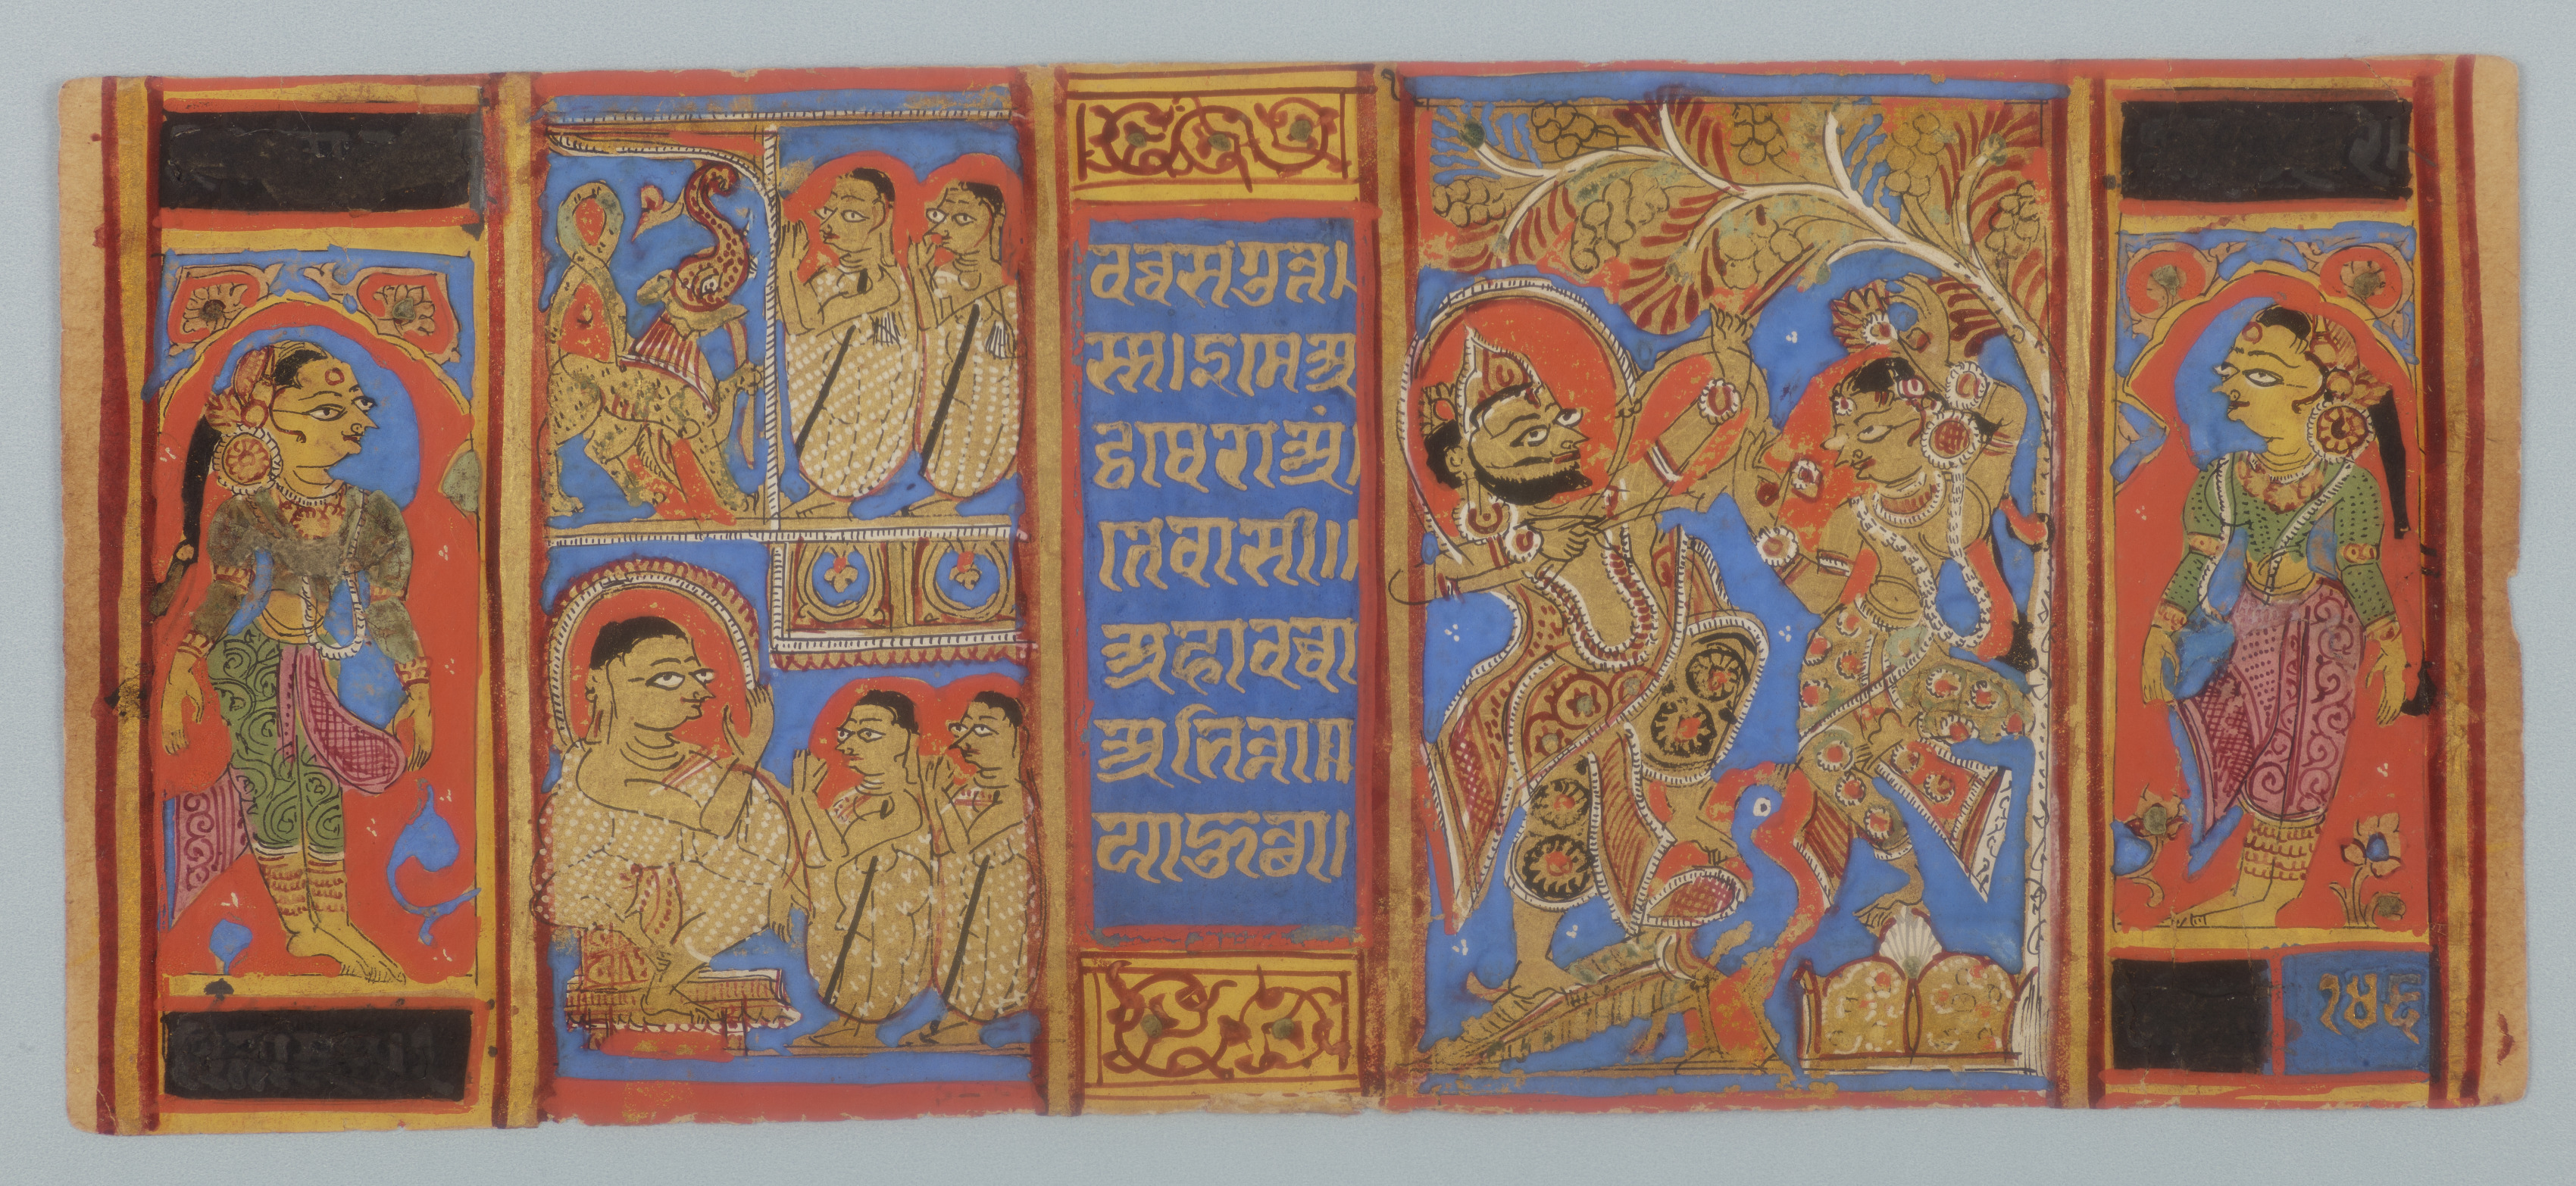 Sthulabhadra and his sisters; Kosha and the charioteer, folio 146 (verso) from the “Devasano Pada Bhandar” Kalpa-sutra